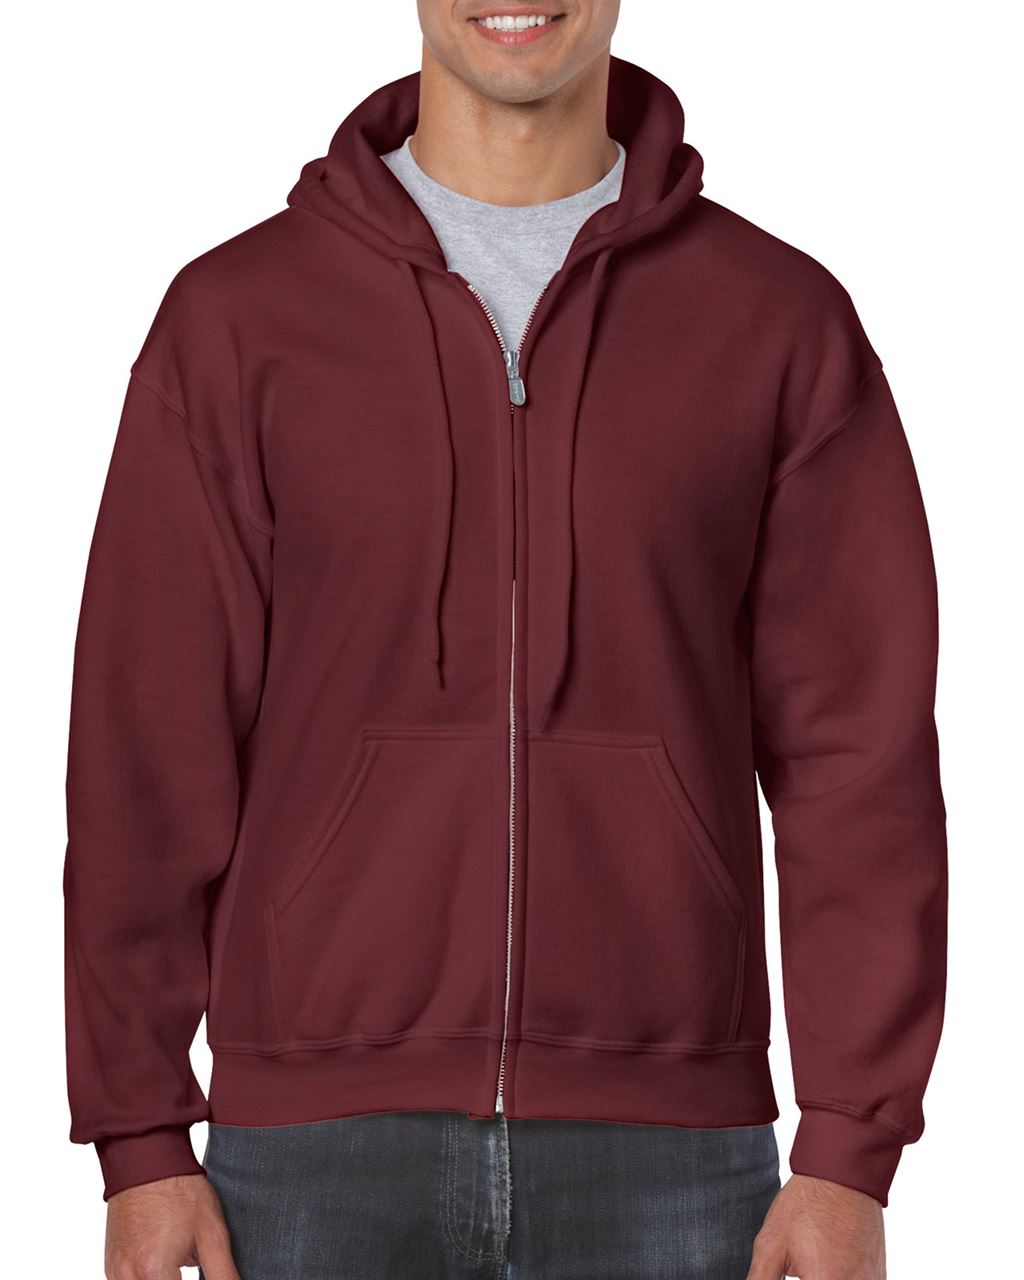 Gildan Heavy Blend™ Adult Full Zip Hooded Sweatshirt gi18600ma-2xl Red,  Promotional Items - Promo Direct